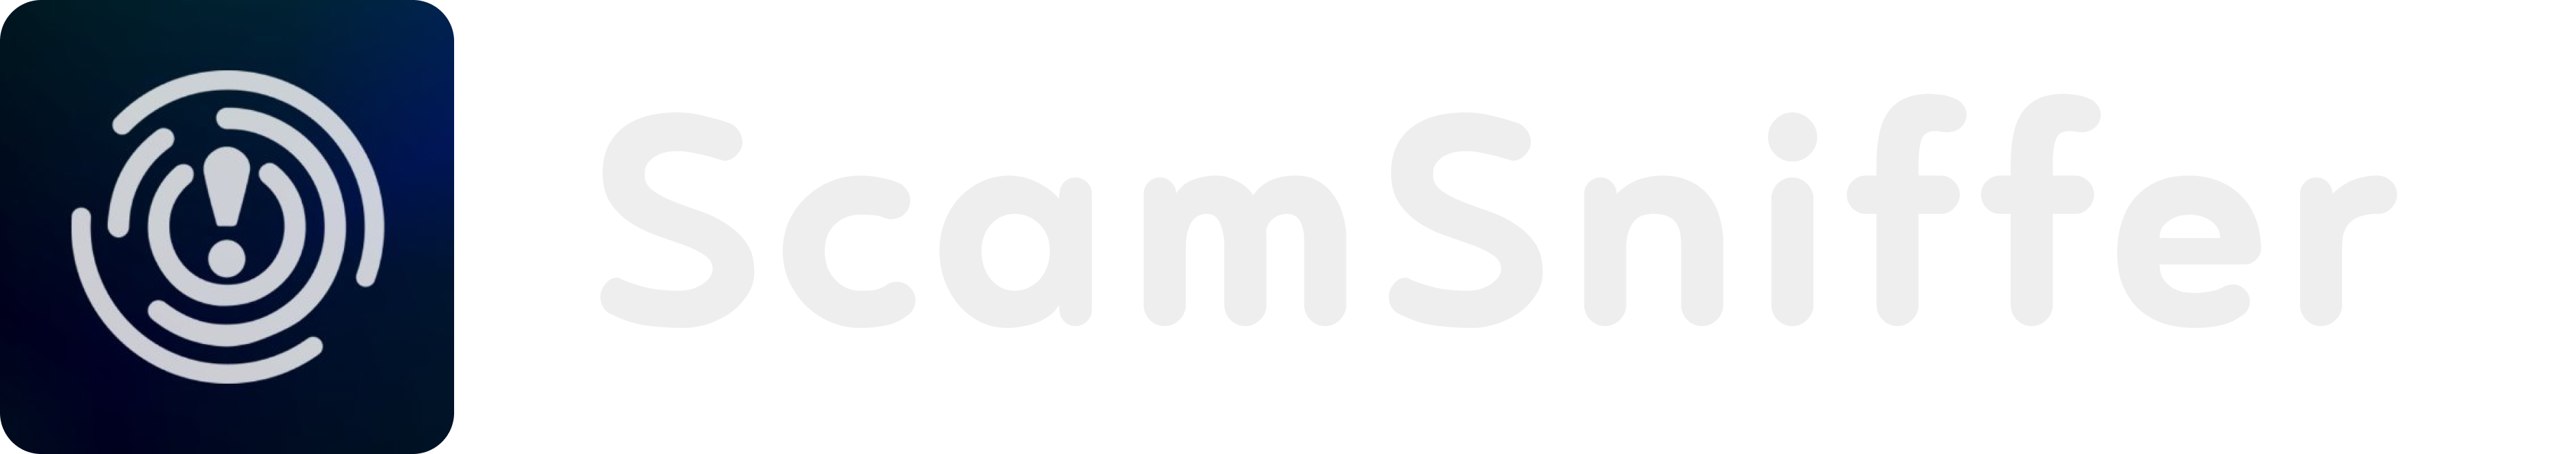 Scamsniffer logo